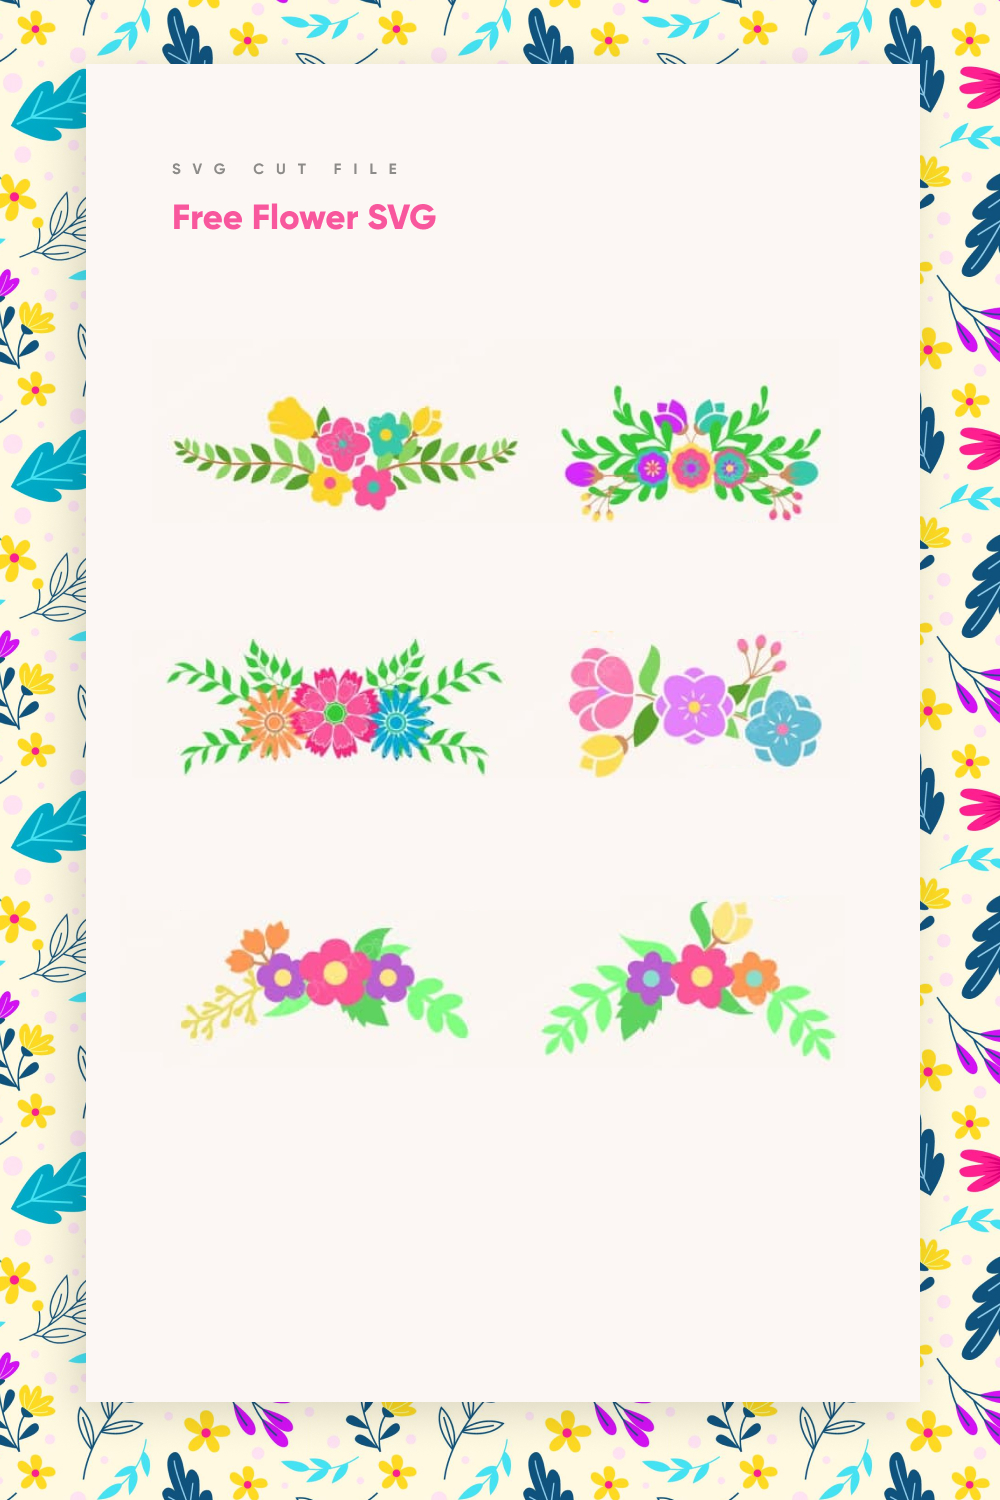 Free Flower SVG pinterest.